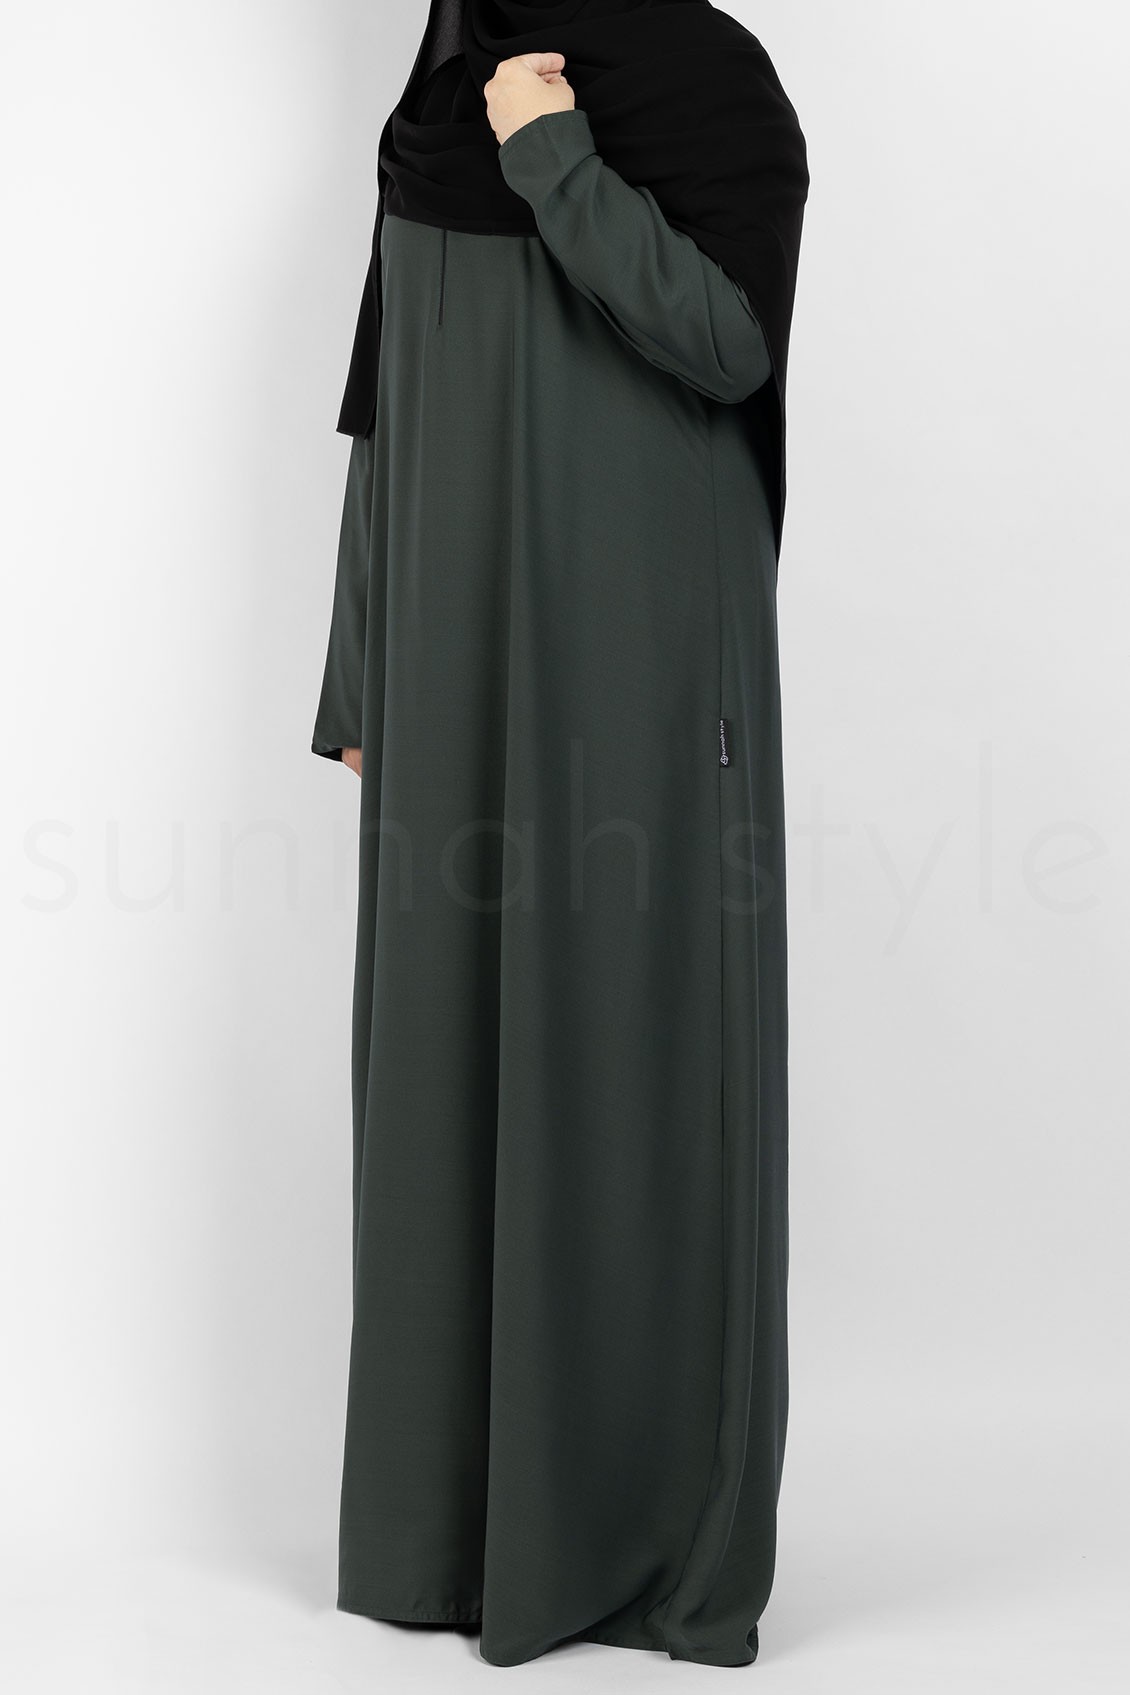 Sunnah Style Plain Closed Abaya Slim Hunter Green